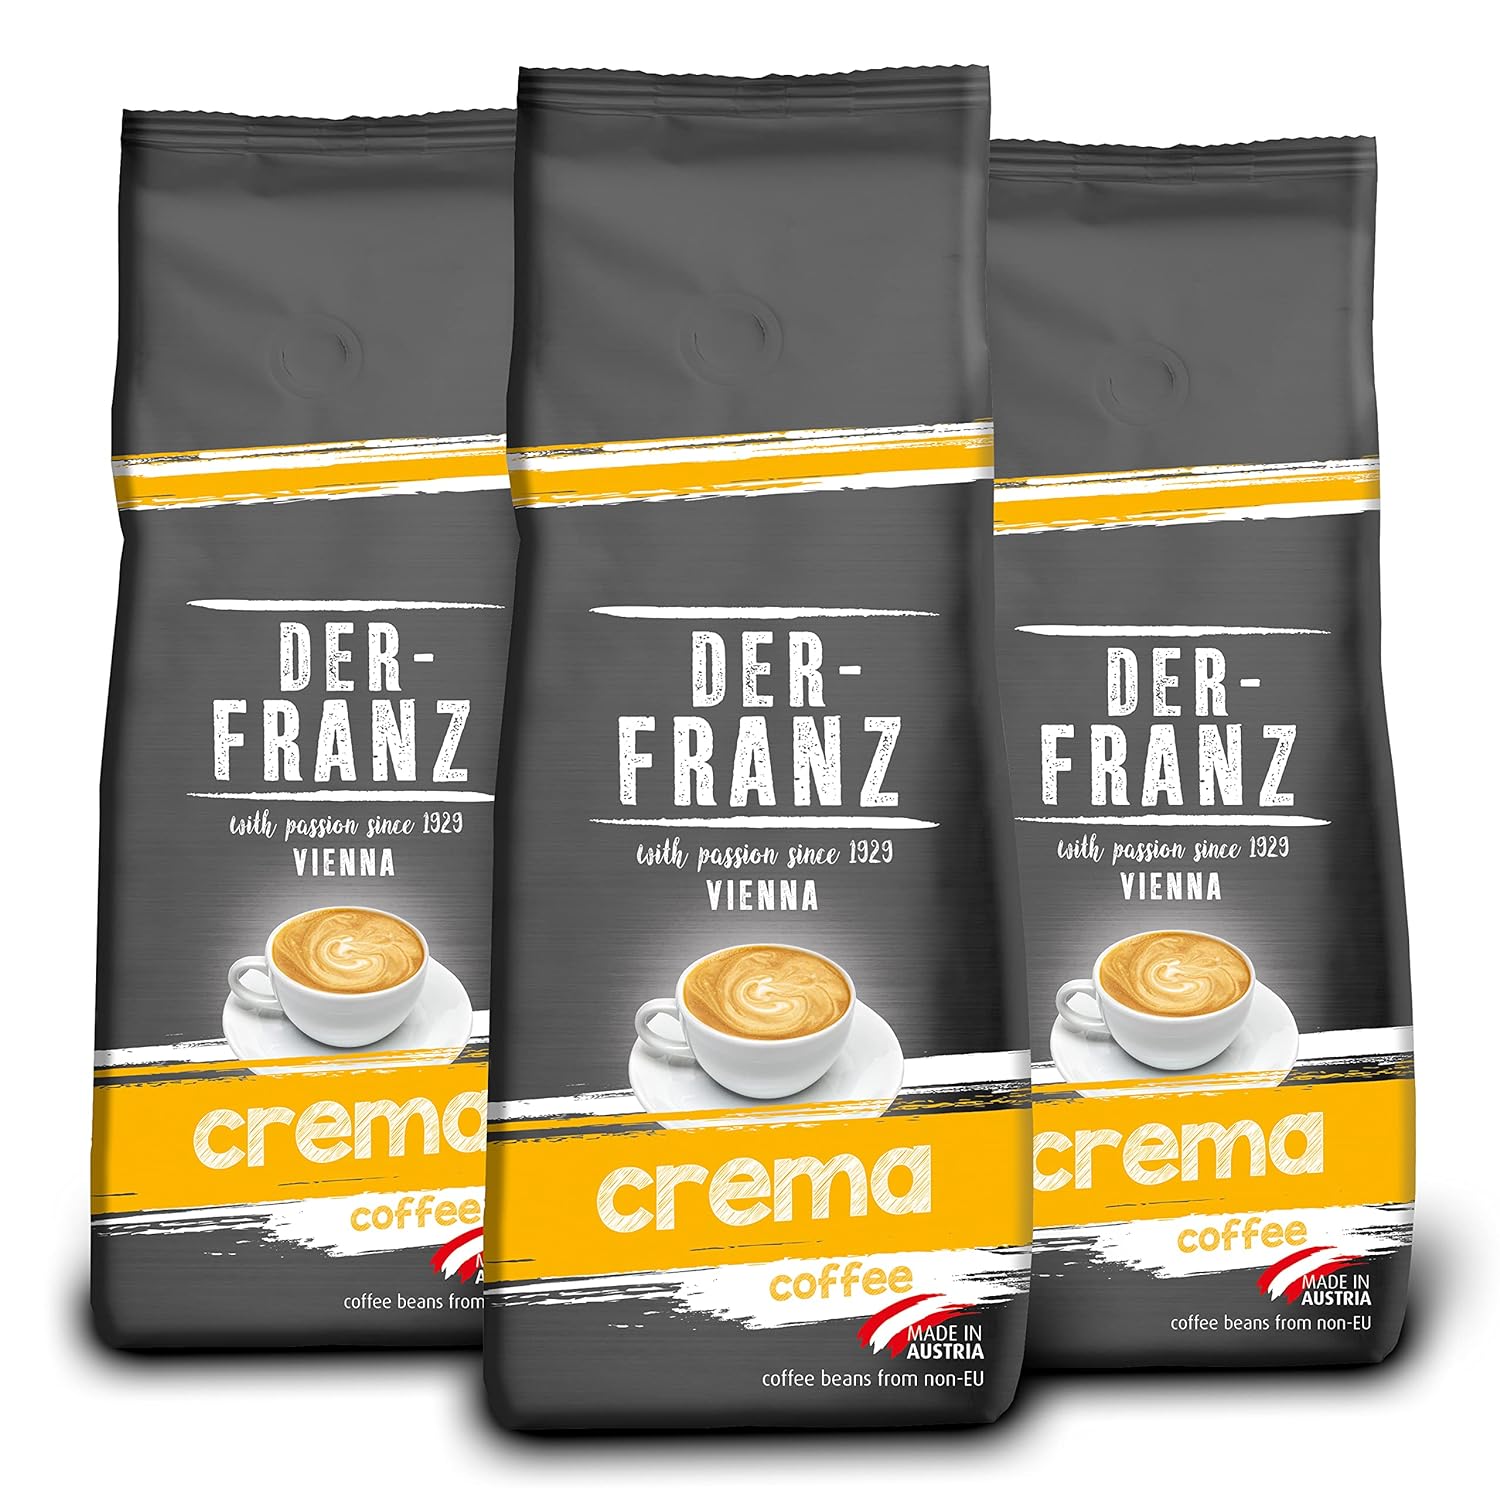 Der-Franz Crema Coffee Whole Bean 3 x 500g